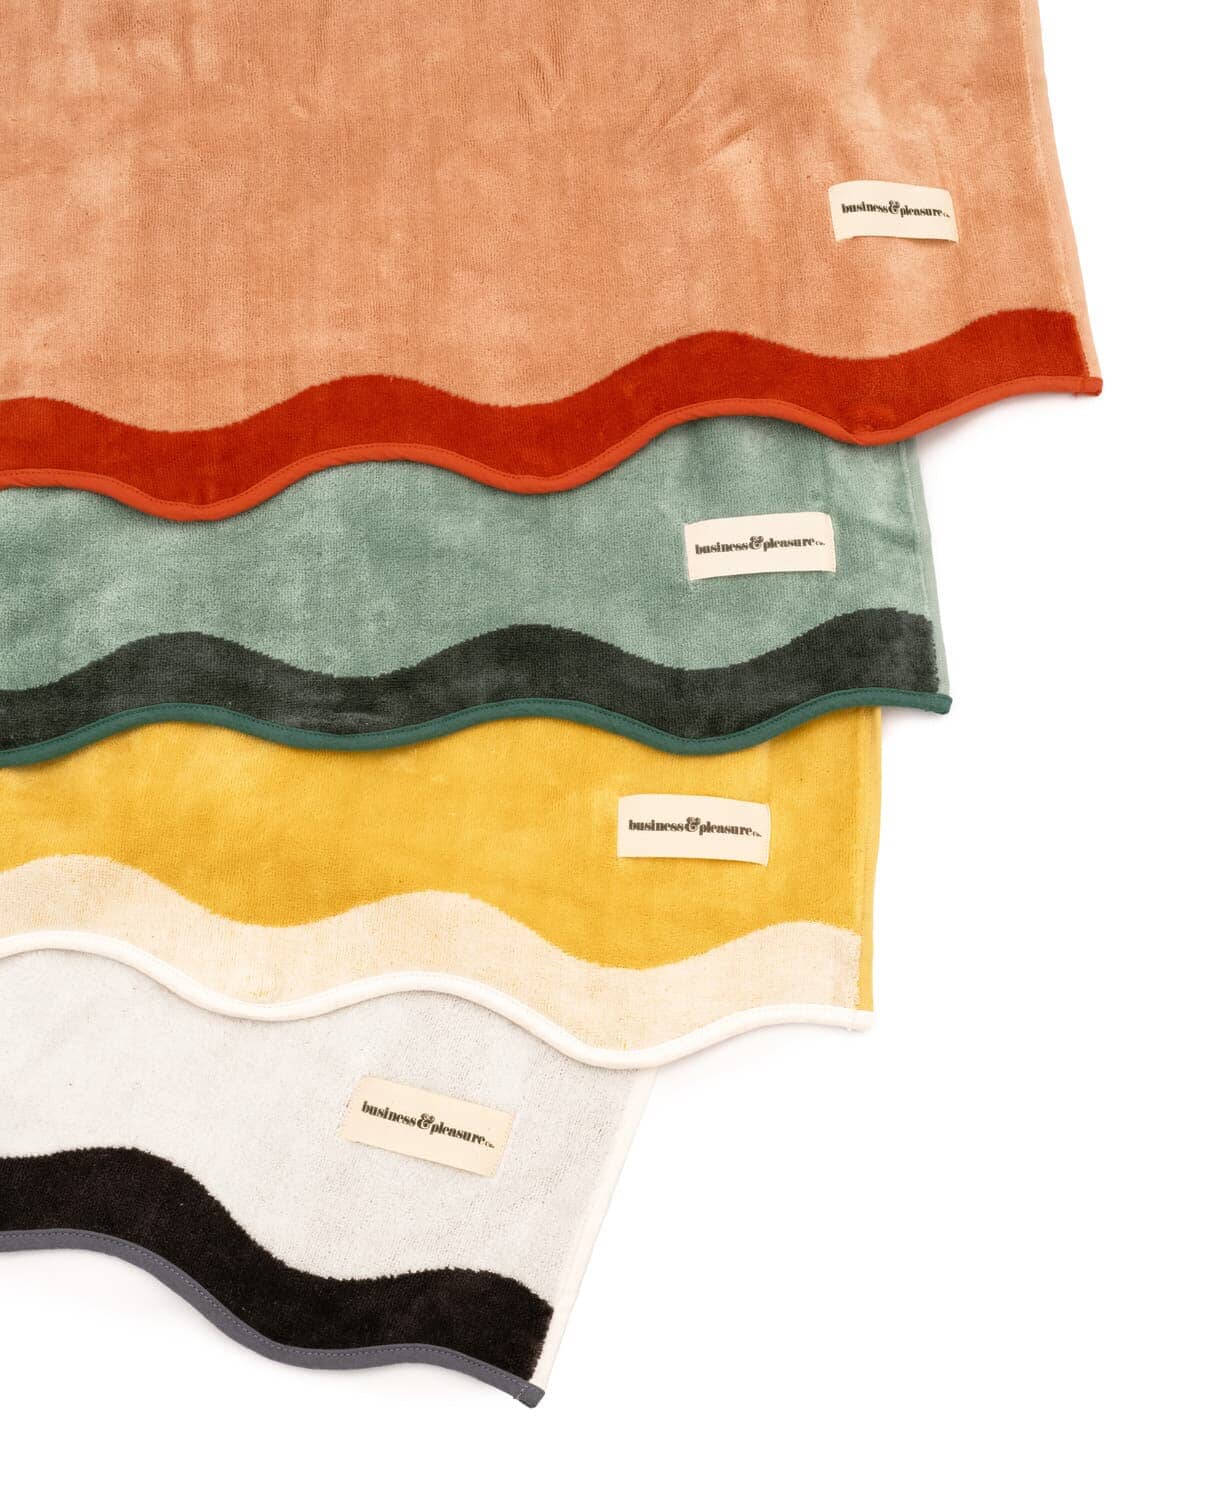 Studio image of riviera beach towels